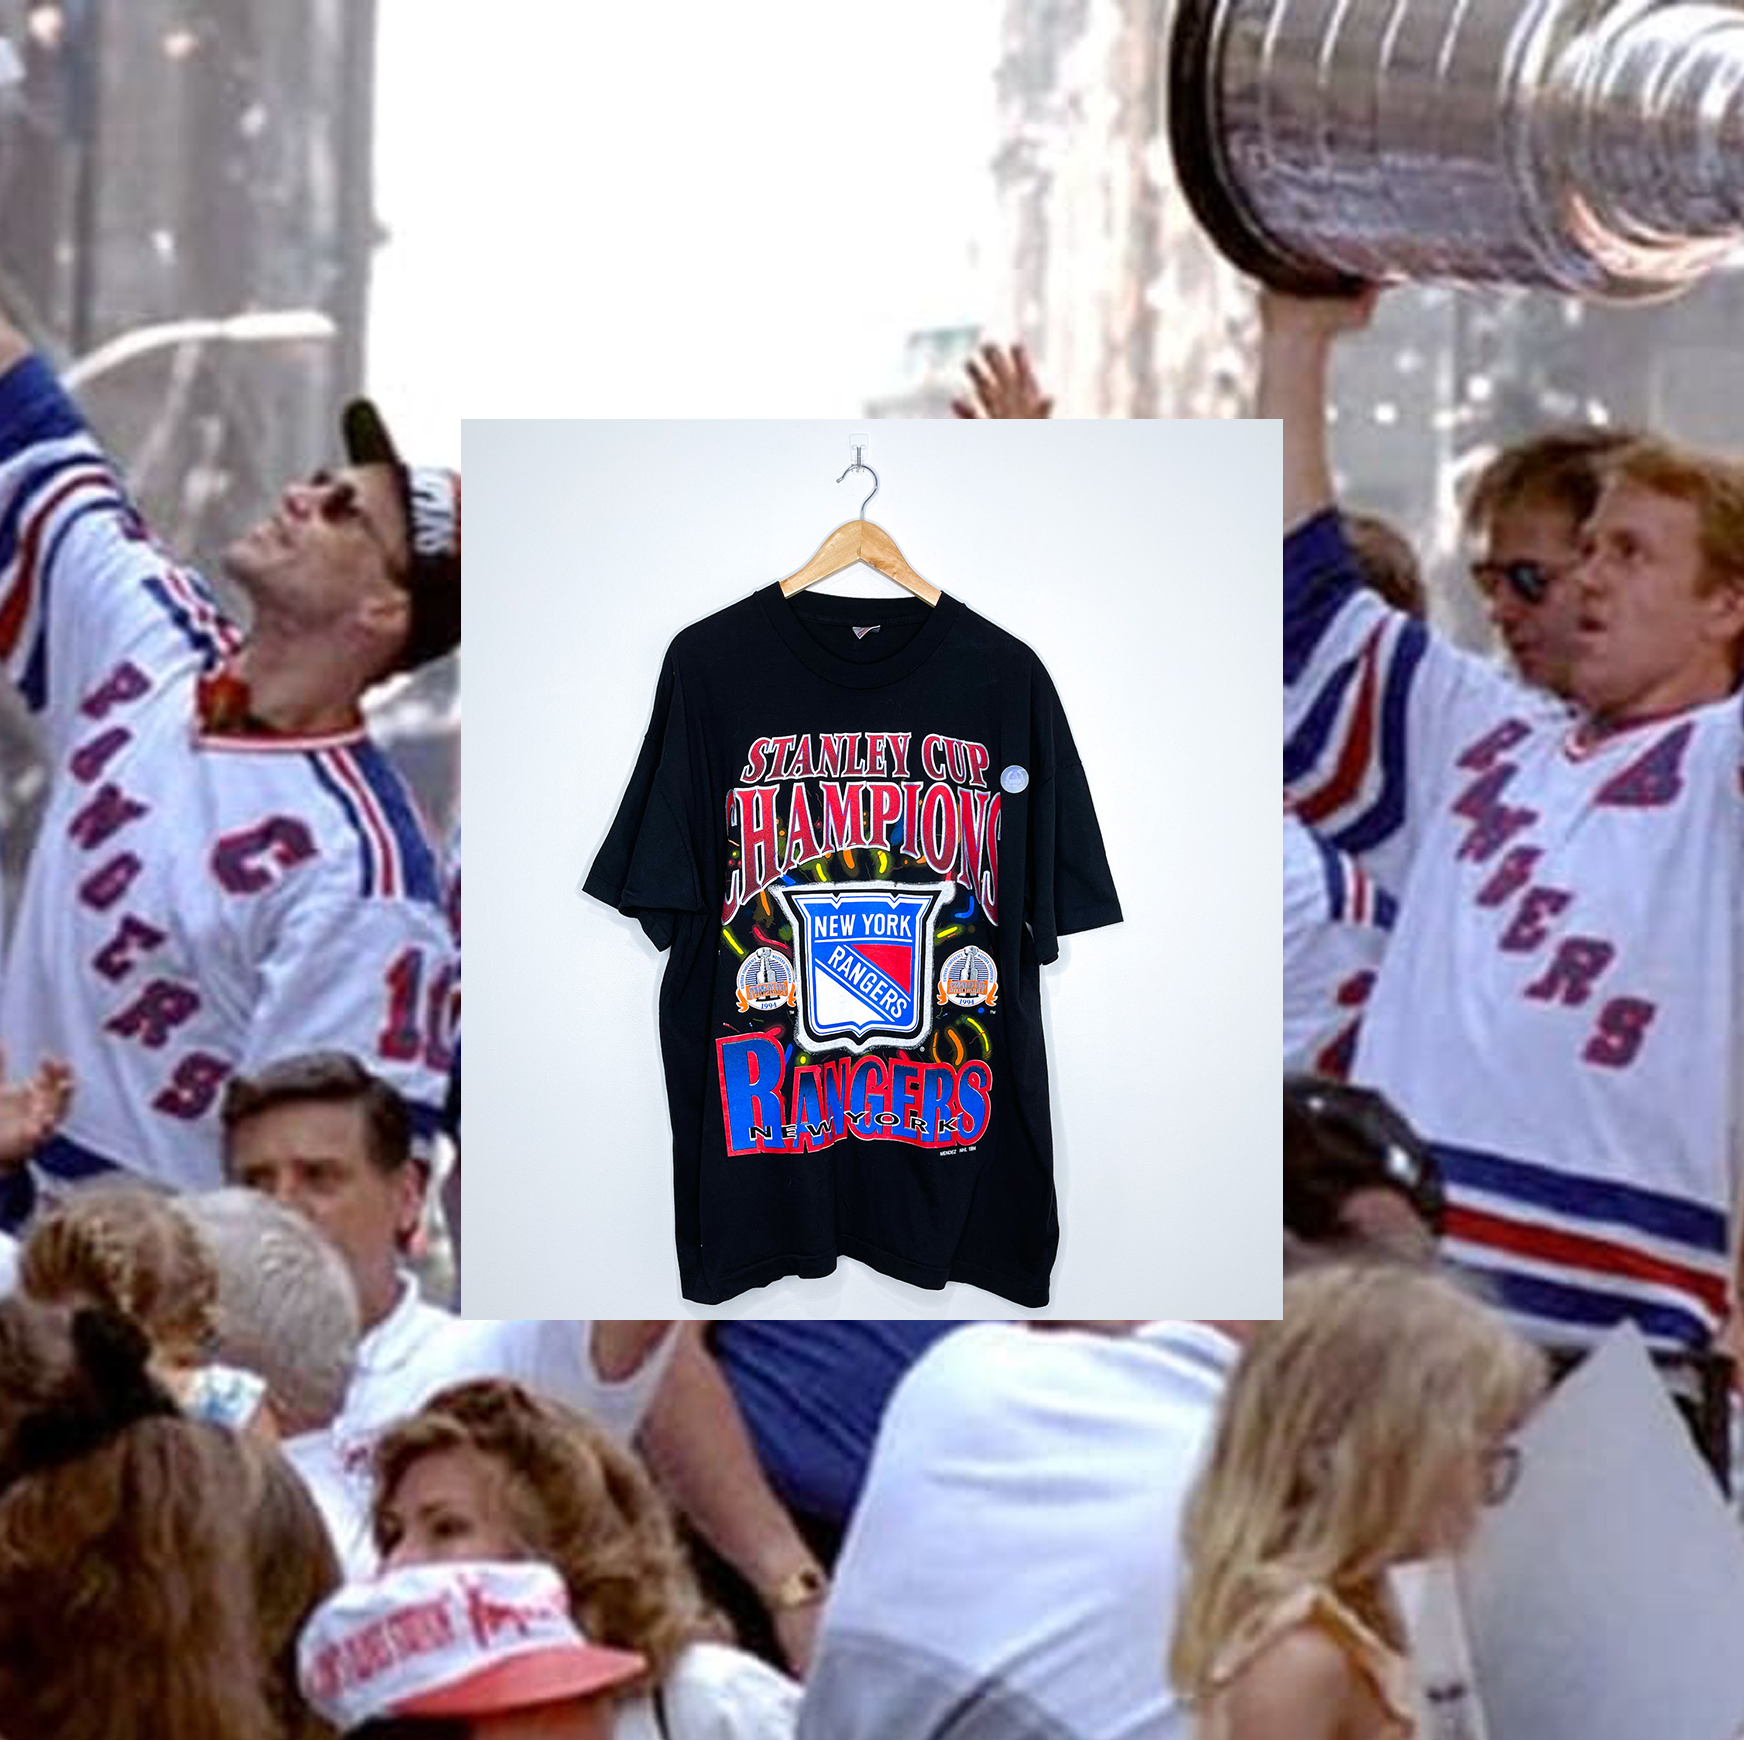 NEW YORK RANGERS "1994 Stanley Cup Champions" VINTAGE TEE (Deadstock)